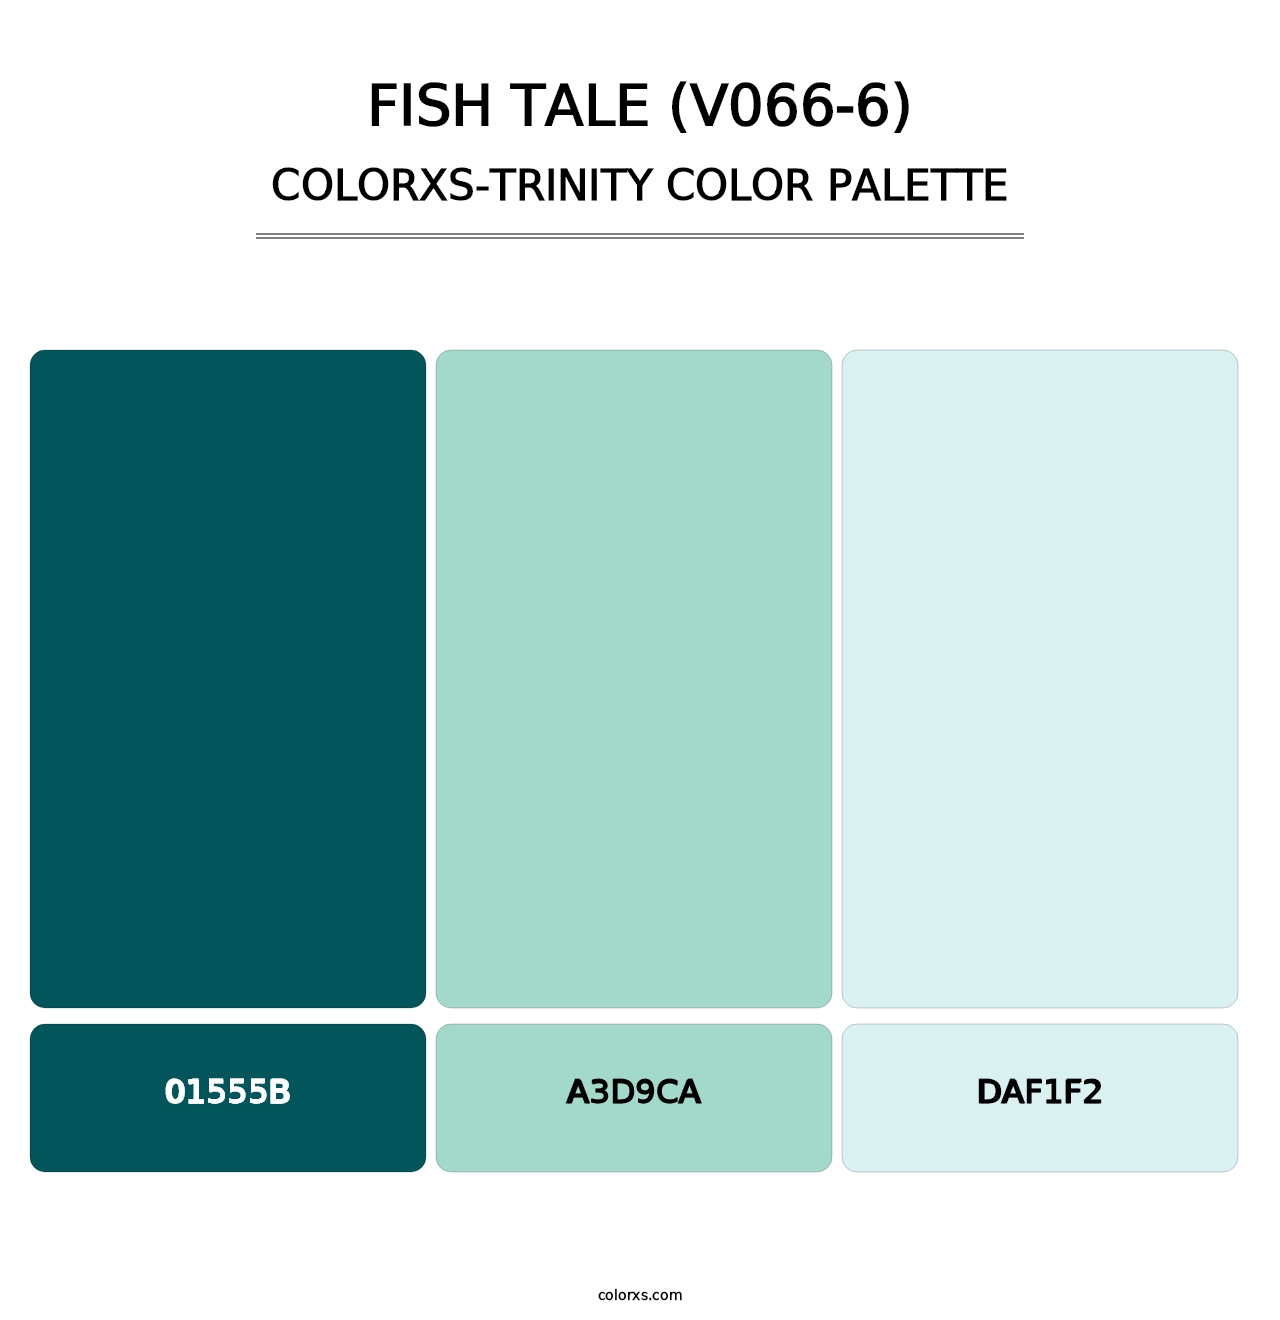 Fish Tale (V066-6) - Colorxs Trinity Palette